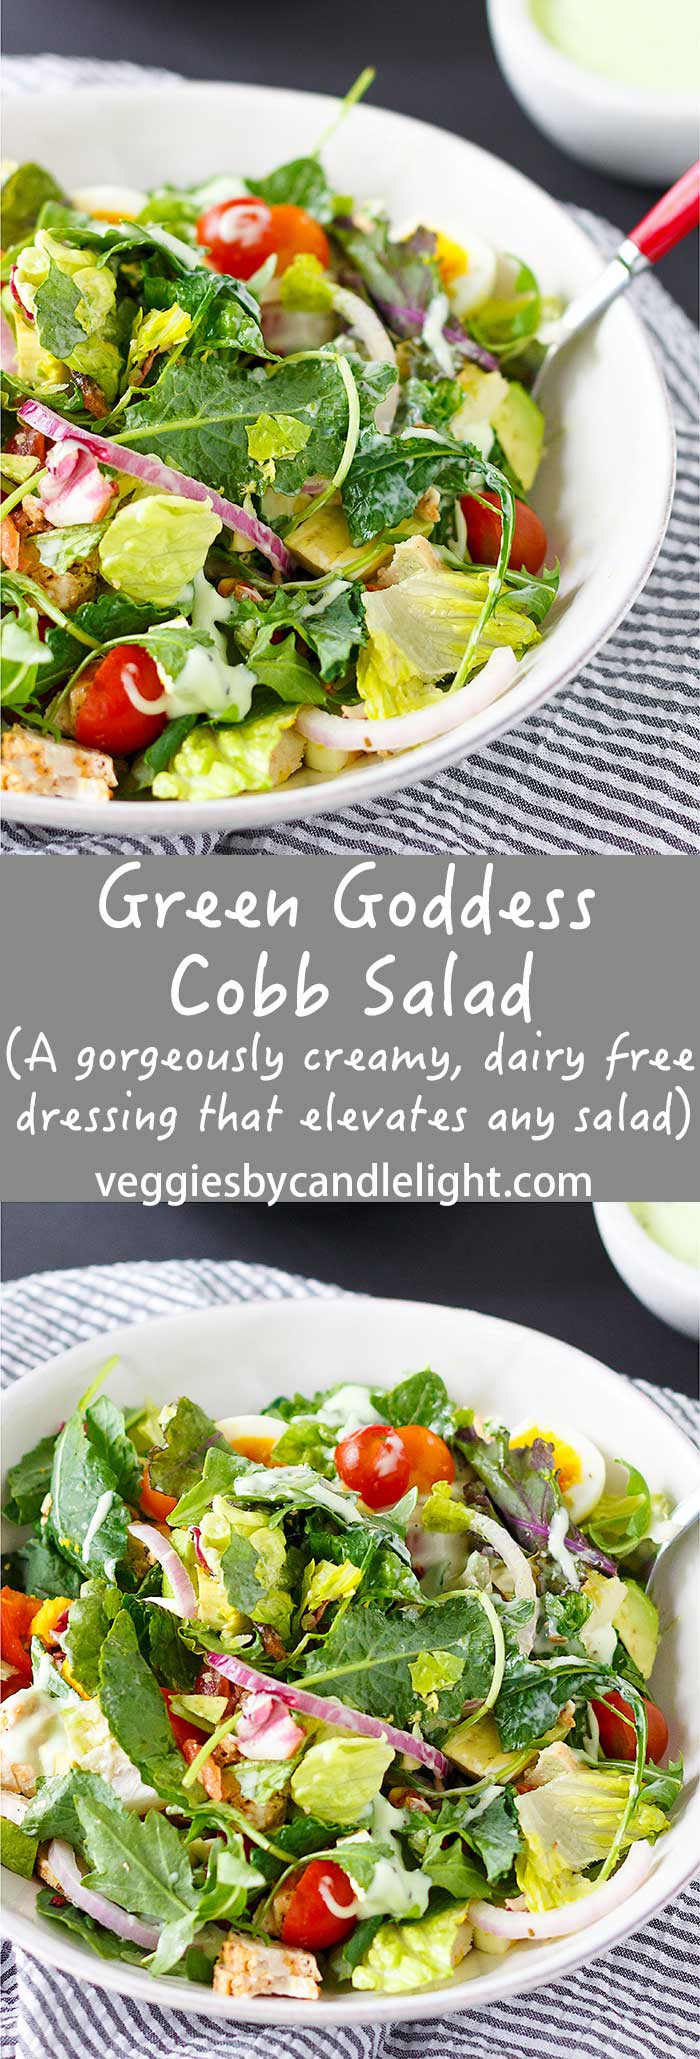 Panera Bread Green Goddess Cobb Salad With Chicken
 Green Goddess Cobb Salad